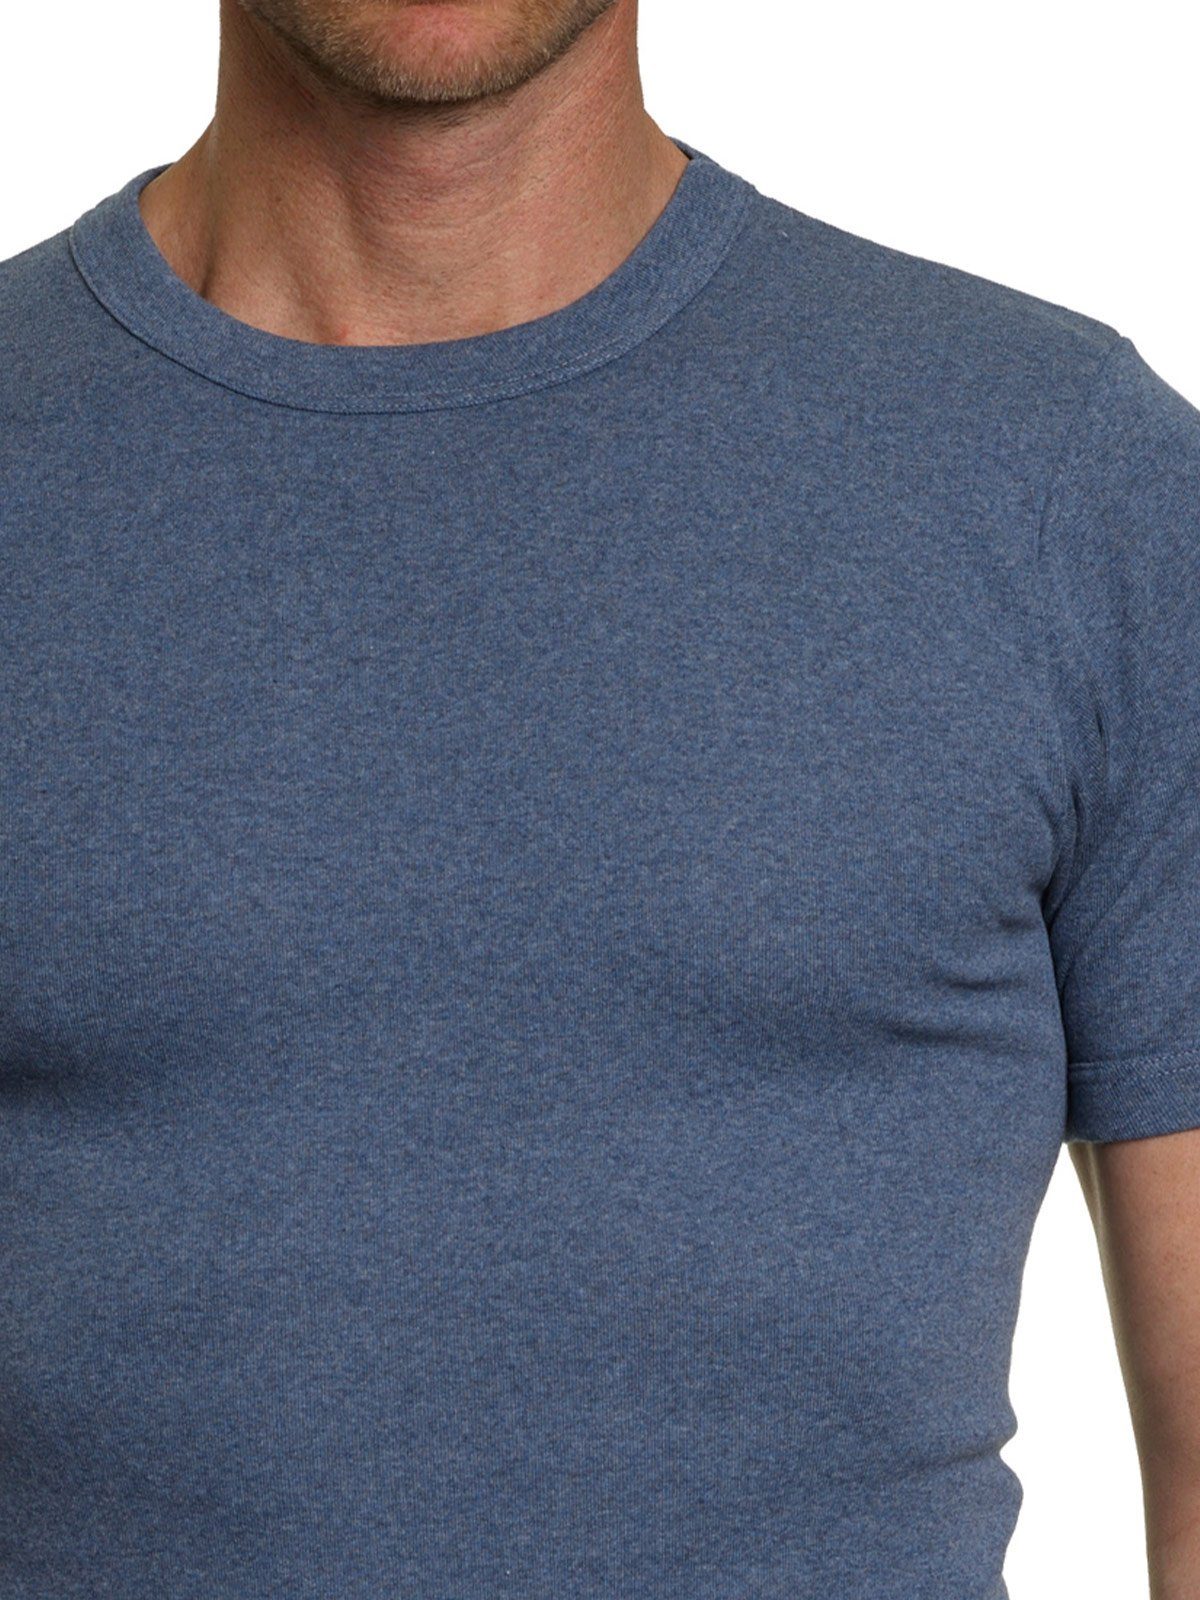 KUMPF Unterziehshirt Herren T-Shirt hohe Markenqualität 1-St) Arm 1/2 (Stück, blau-melange Workerwear